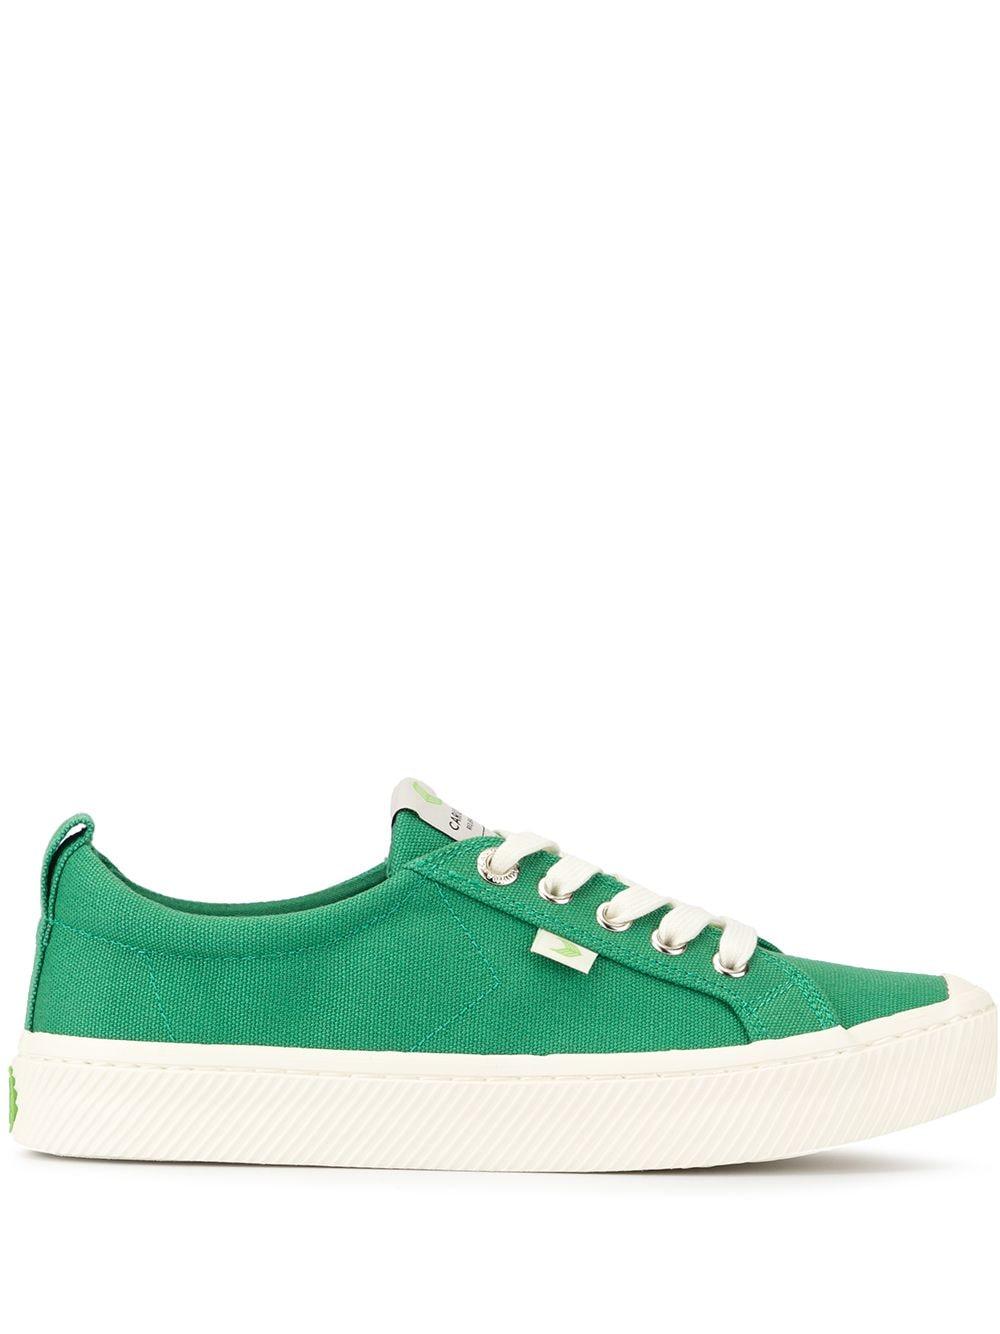 CARIUMA Oca Low Green Canvas Sneaker - Lyst